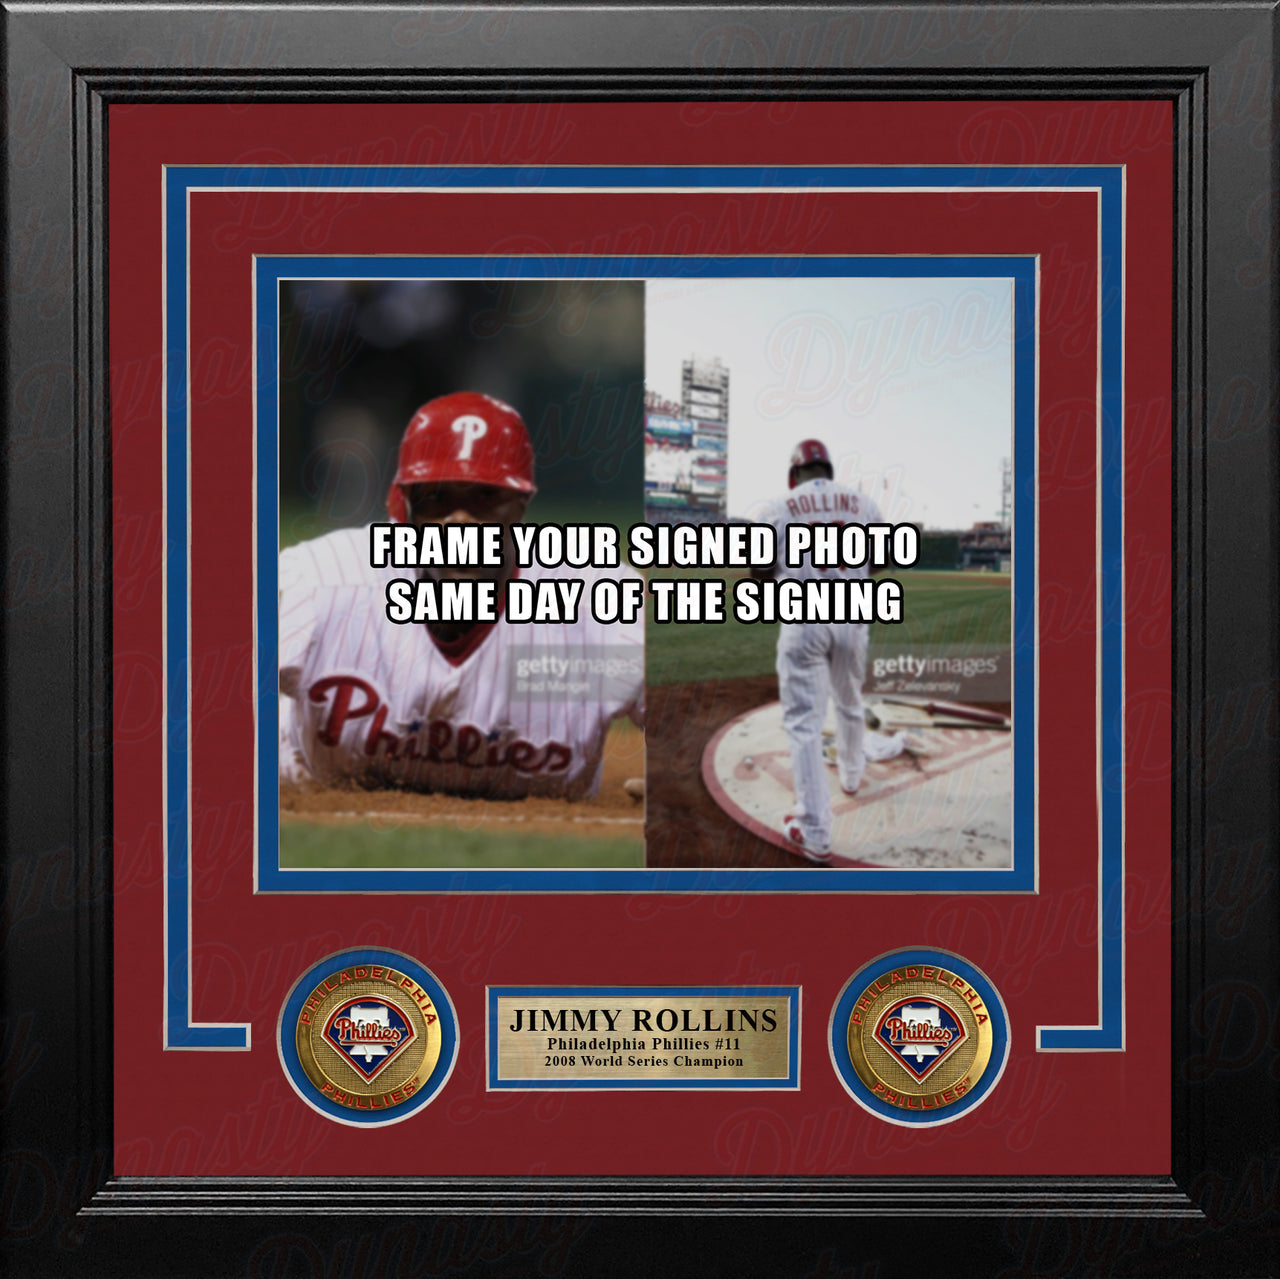 Jimmy Rollins Philadelphia Phillies 2008 World Series Photo Horizontal Frame Kit - Dynasty Sports & Framing 